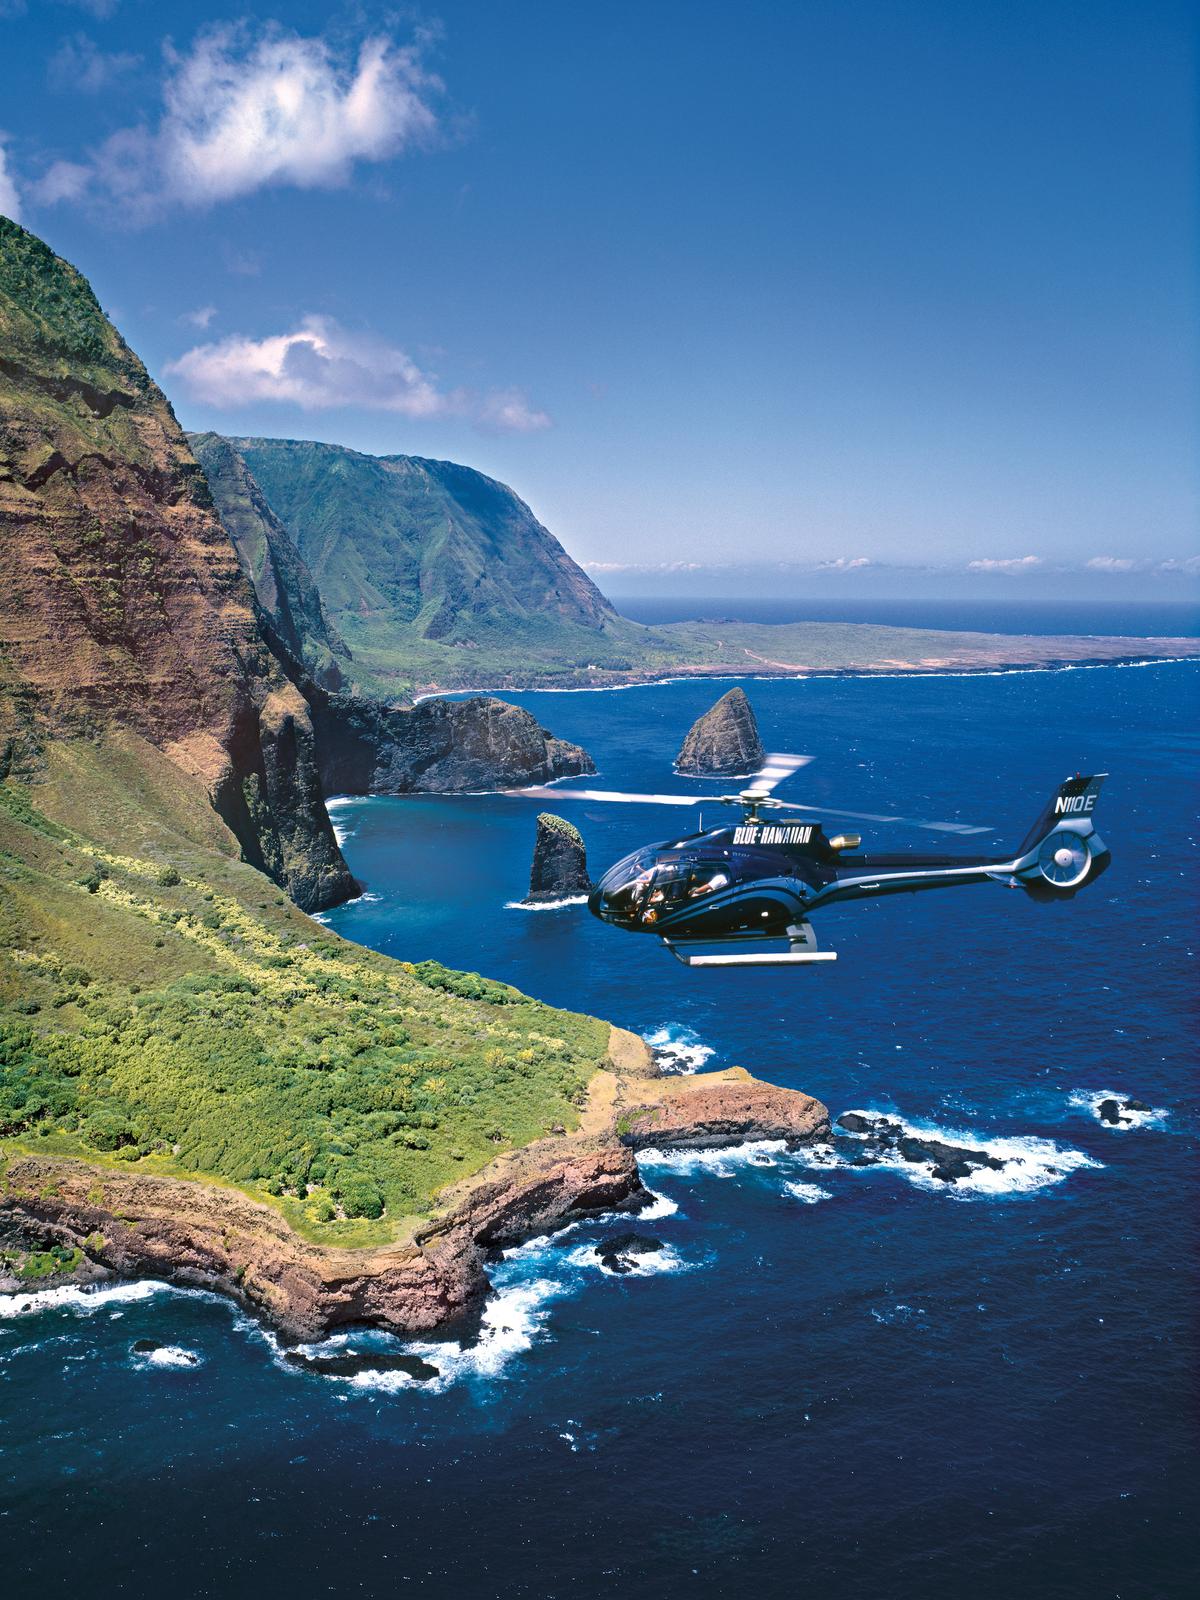 Blue Hawaiian Helicopters take visitors soaring high above Hawaii's spectacular natural wonders. (Courtesy of Blue Hawaiian)